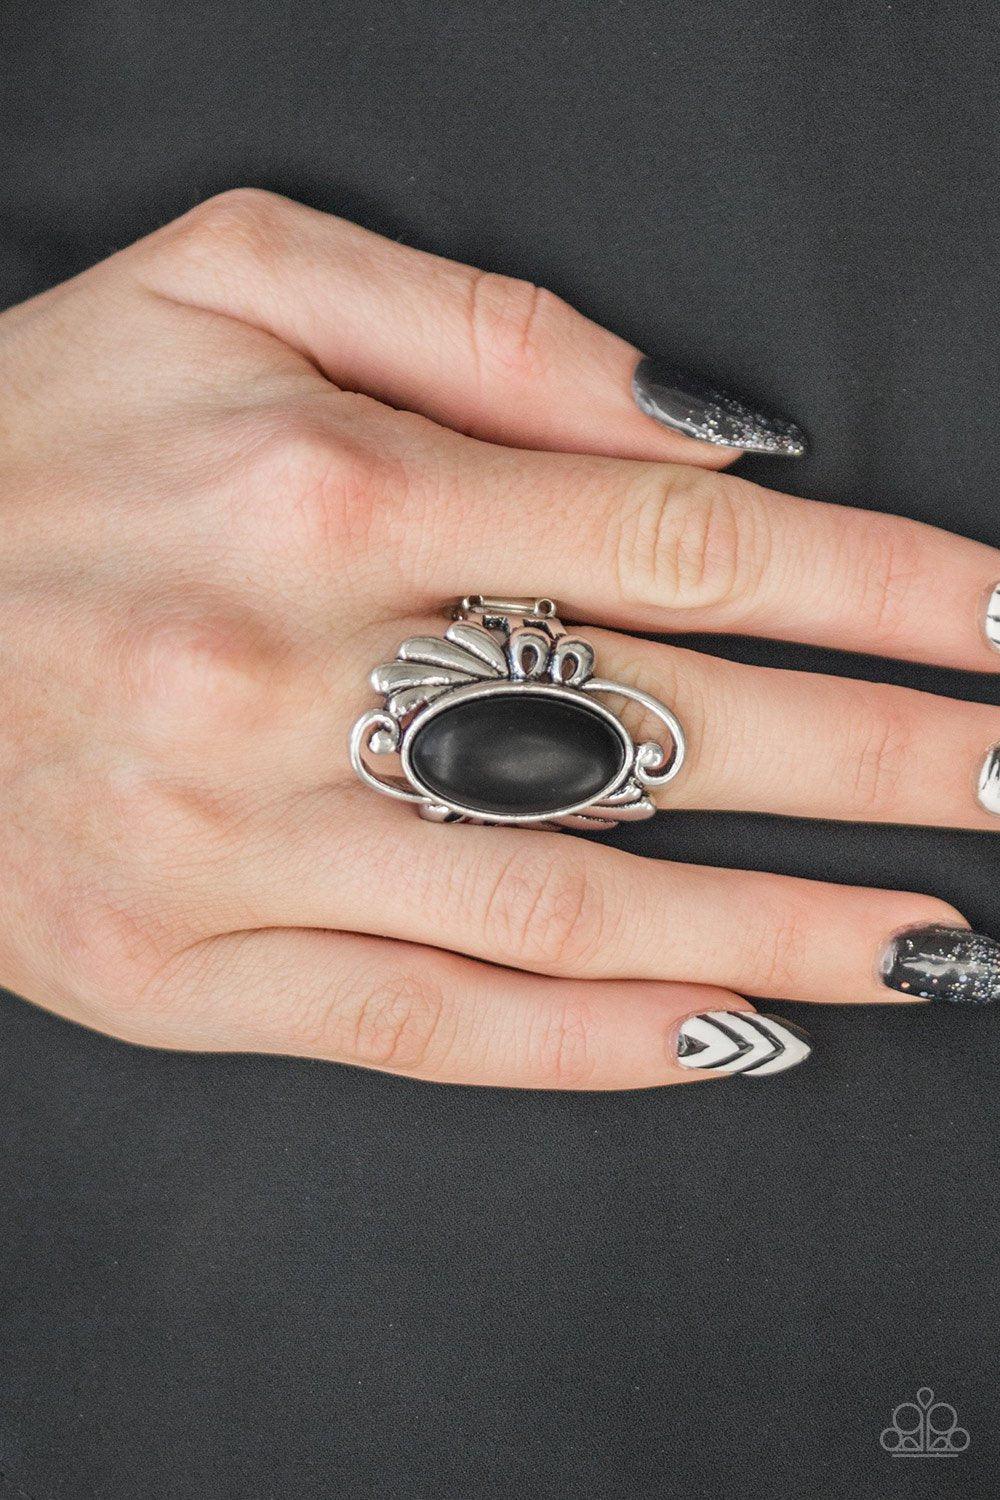 Sedona Sunset Black Stone Ring - Paparazzi Accessories- lightbox - CarasShop.com - $5 Jewelry by Cara Jewels